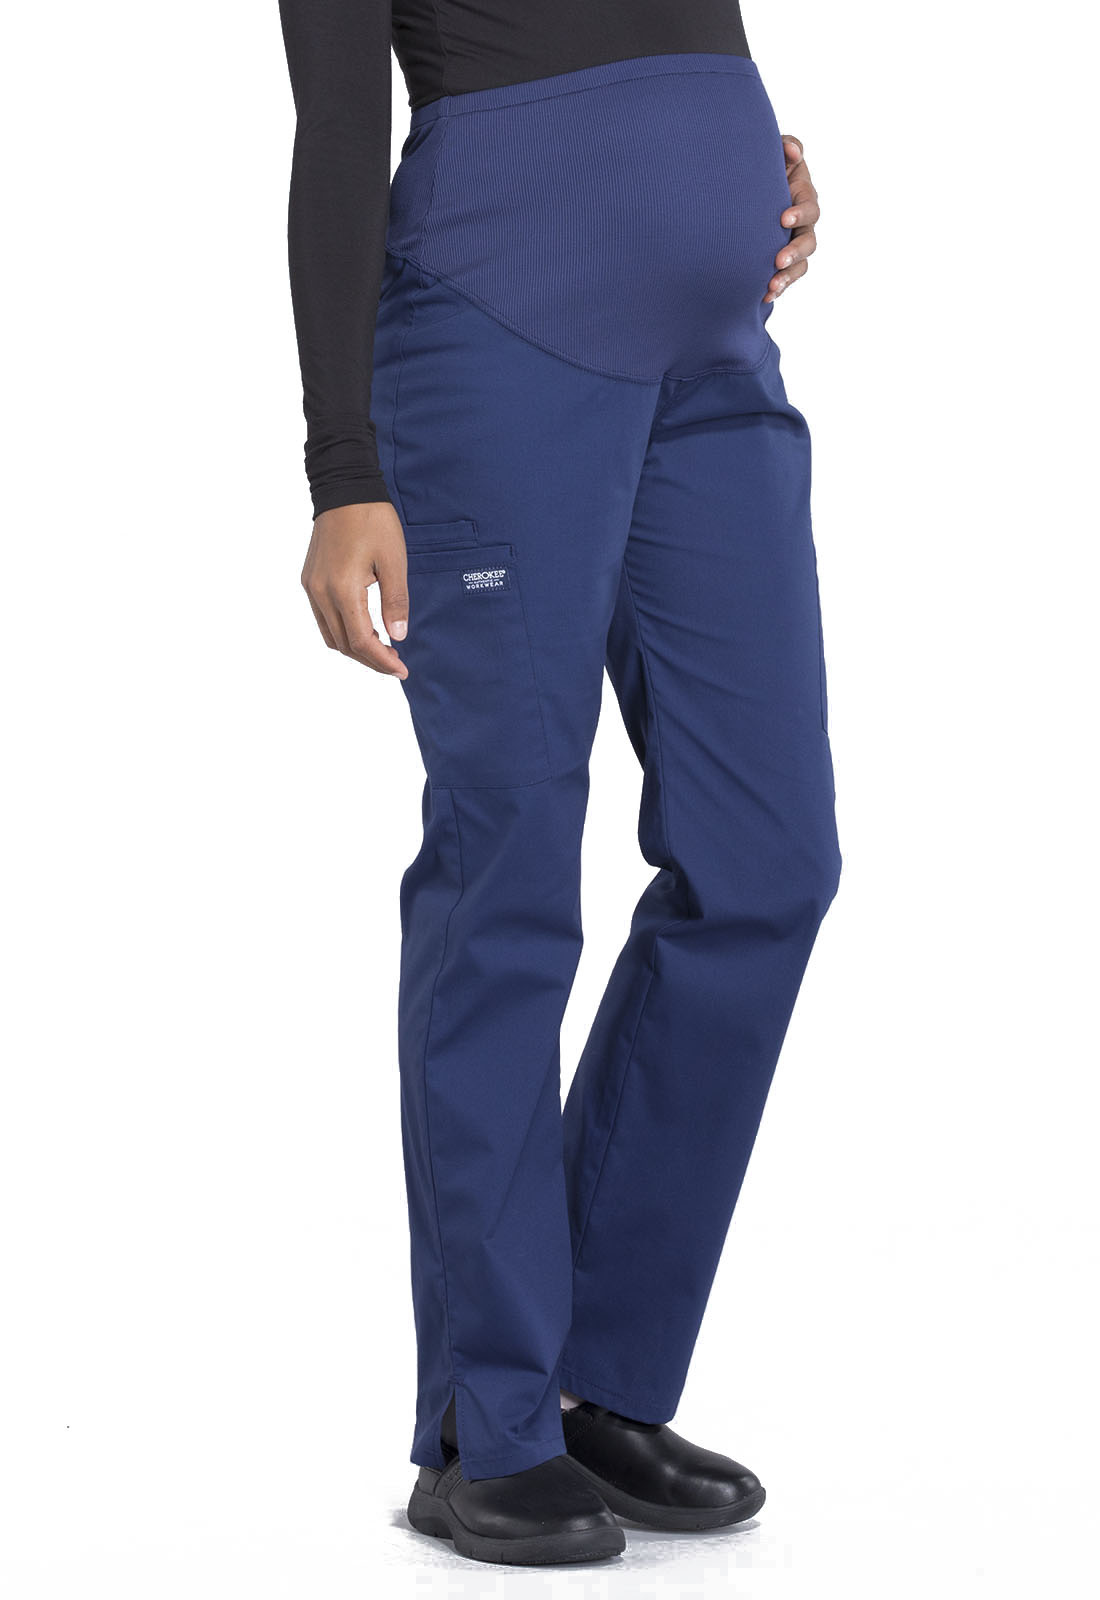 CHEROKEE WORKWEAR Navy Blue Maternity Pants 4208